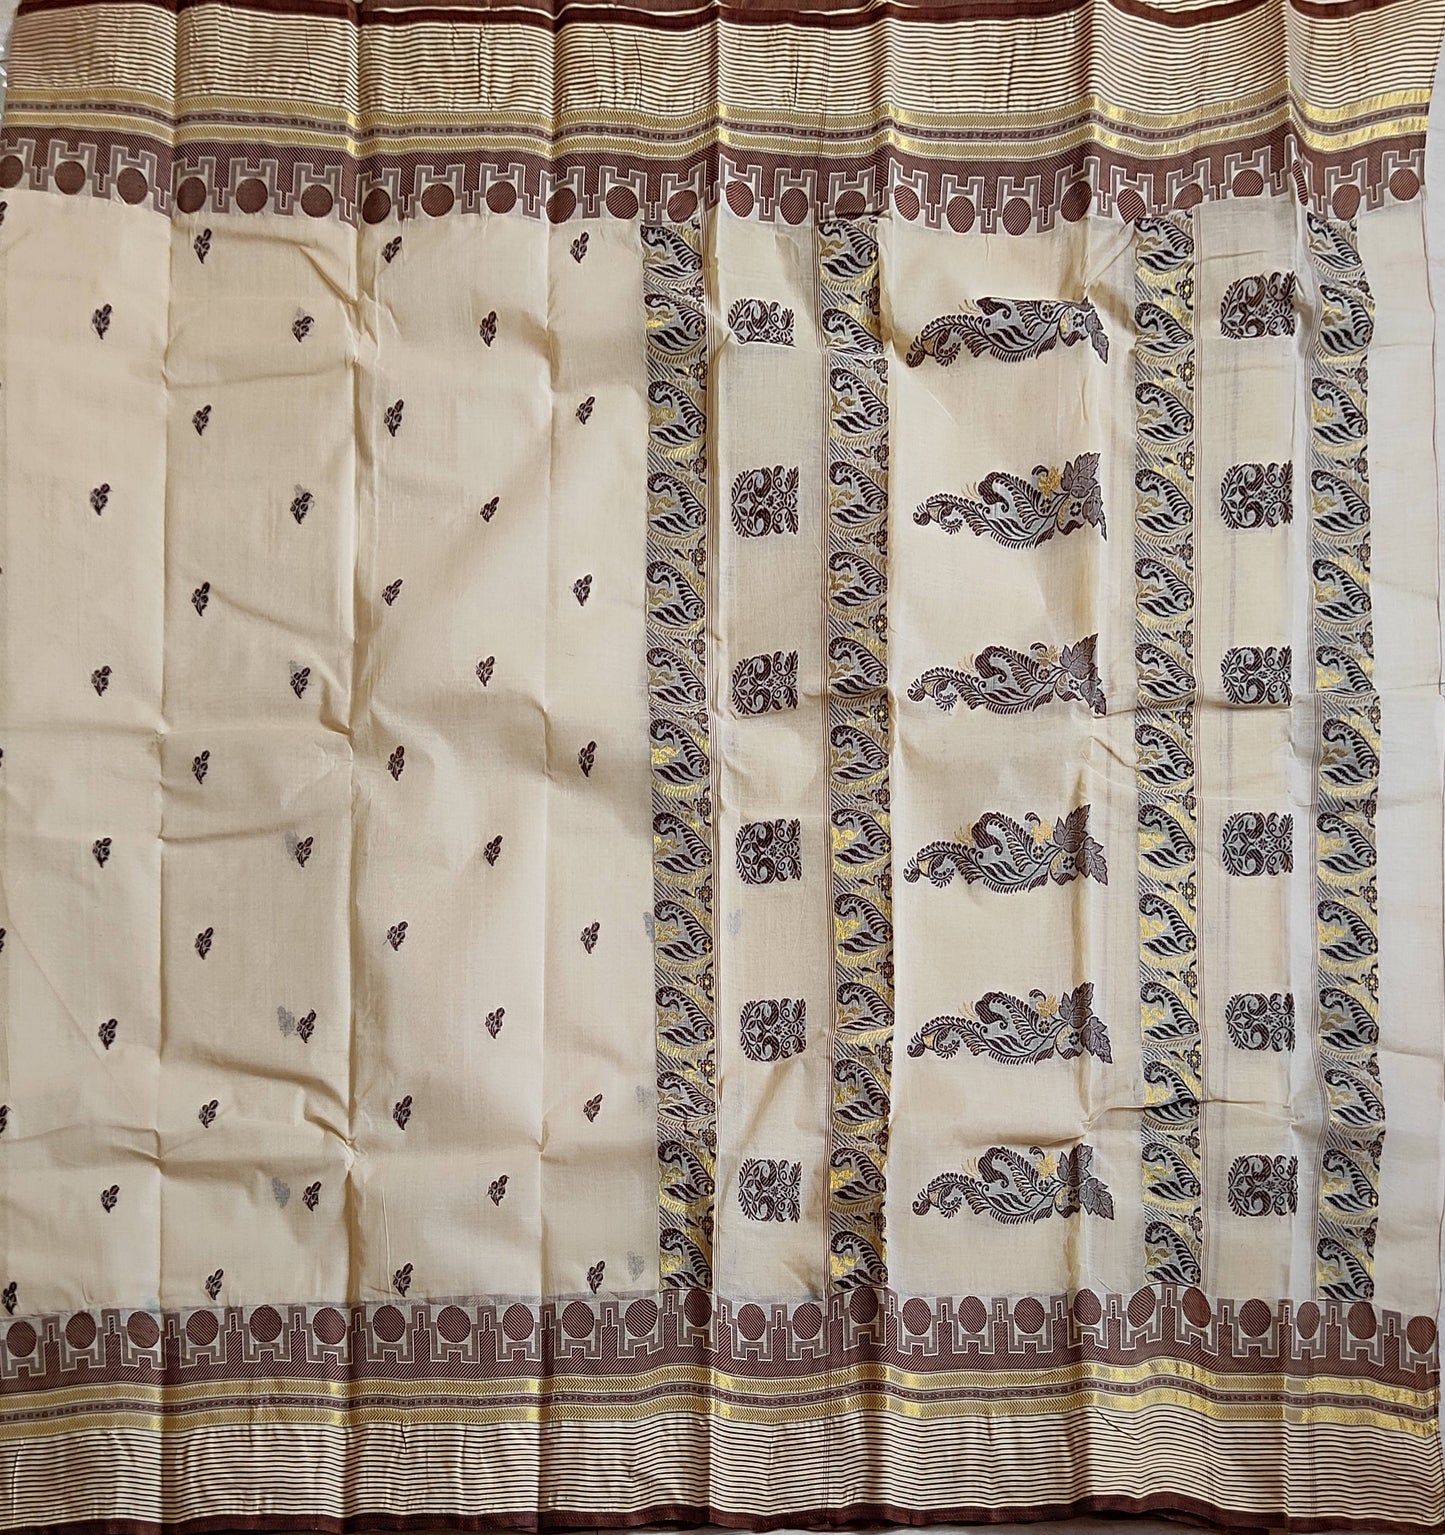 Pradip Fabrics Woven Cream Color Pure Tant cotton  Saree